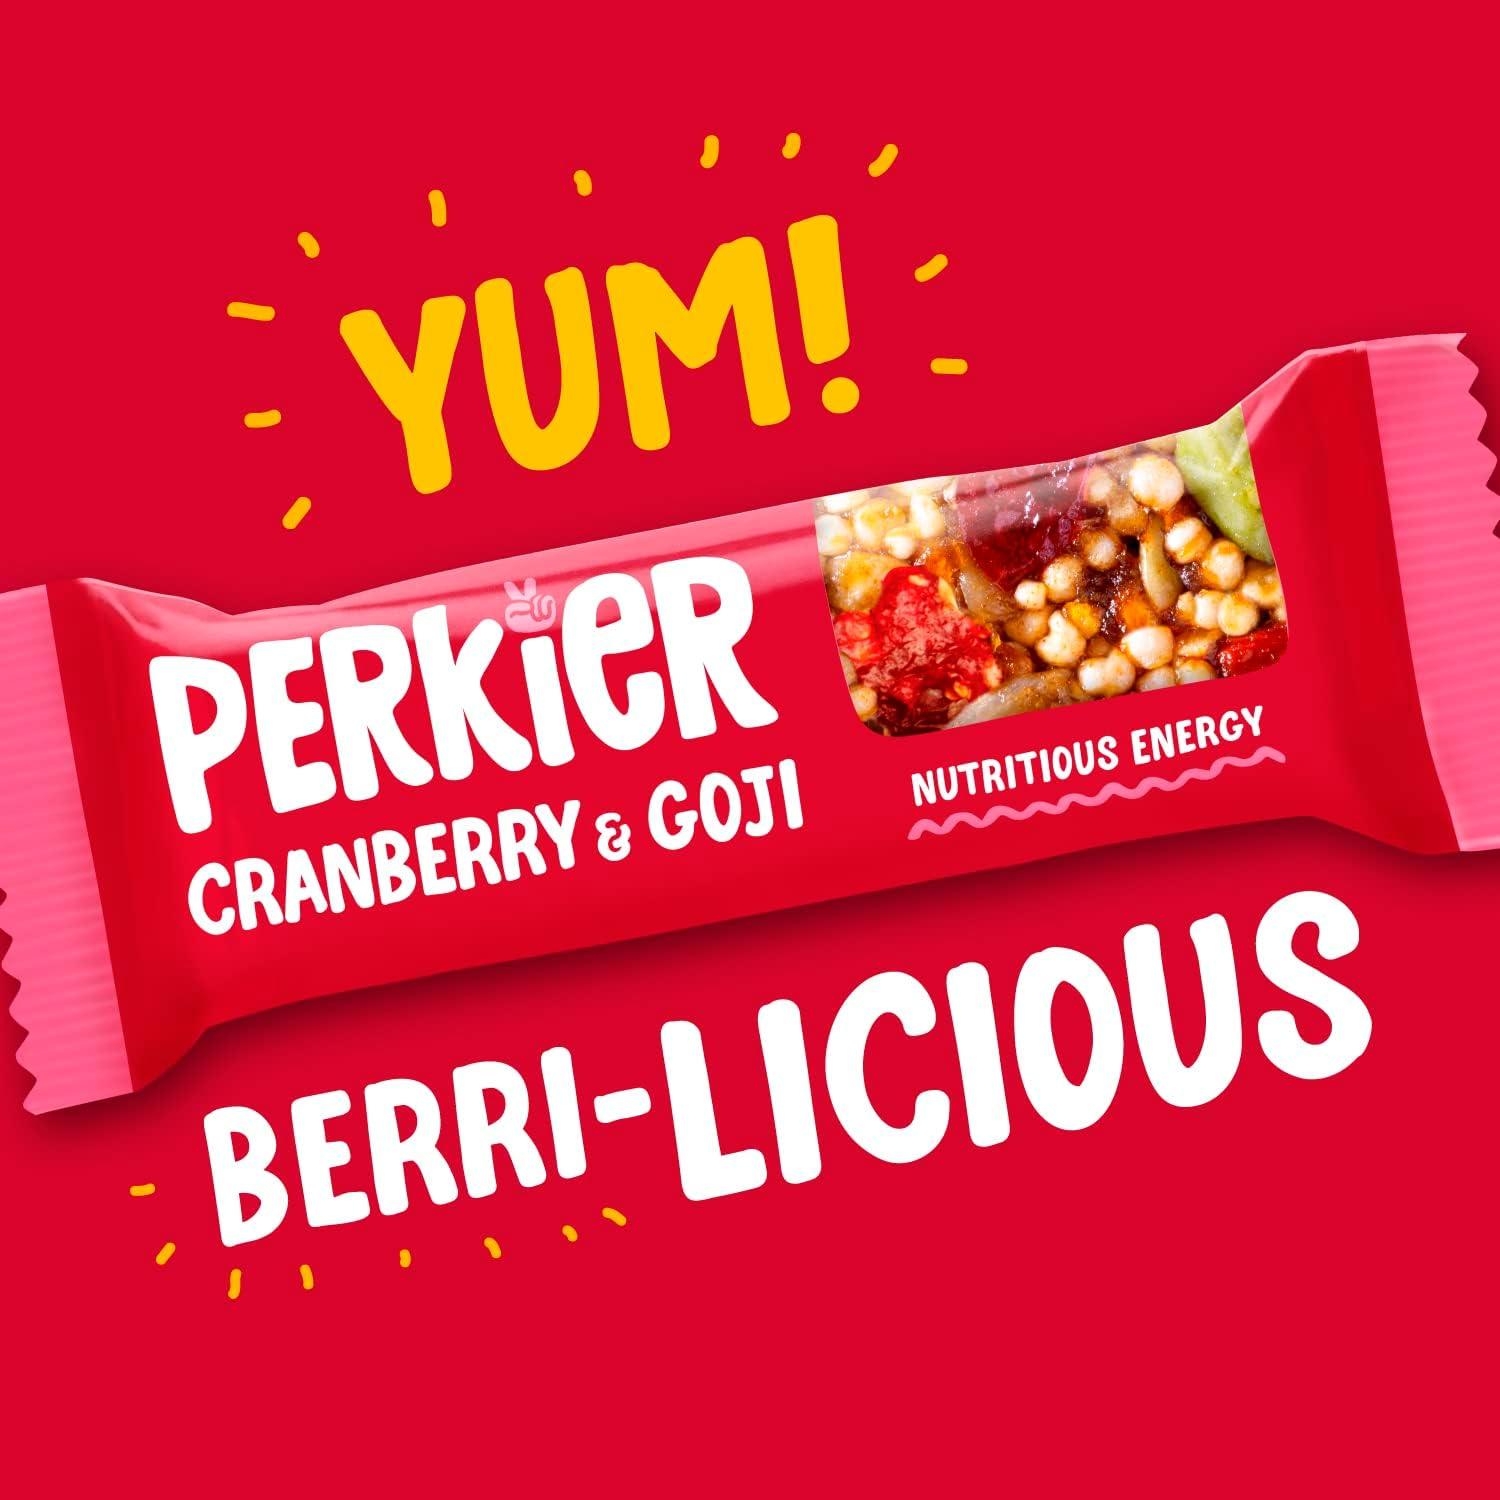 Perkier Cranberry & Goji Snack Bars (18 x 35g) – Vegan – Gluten Free - Vending Superstore